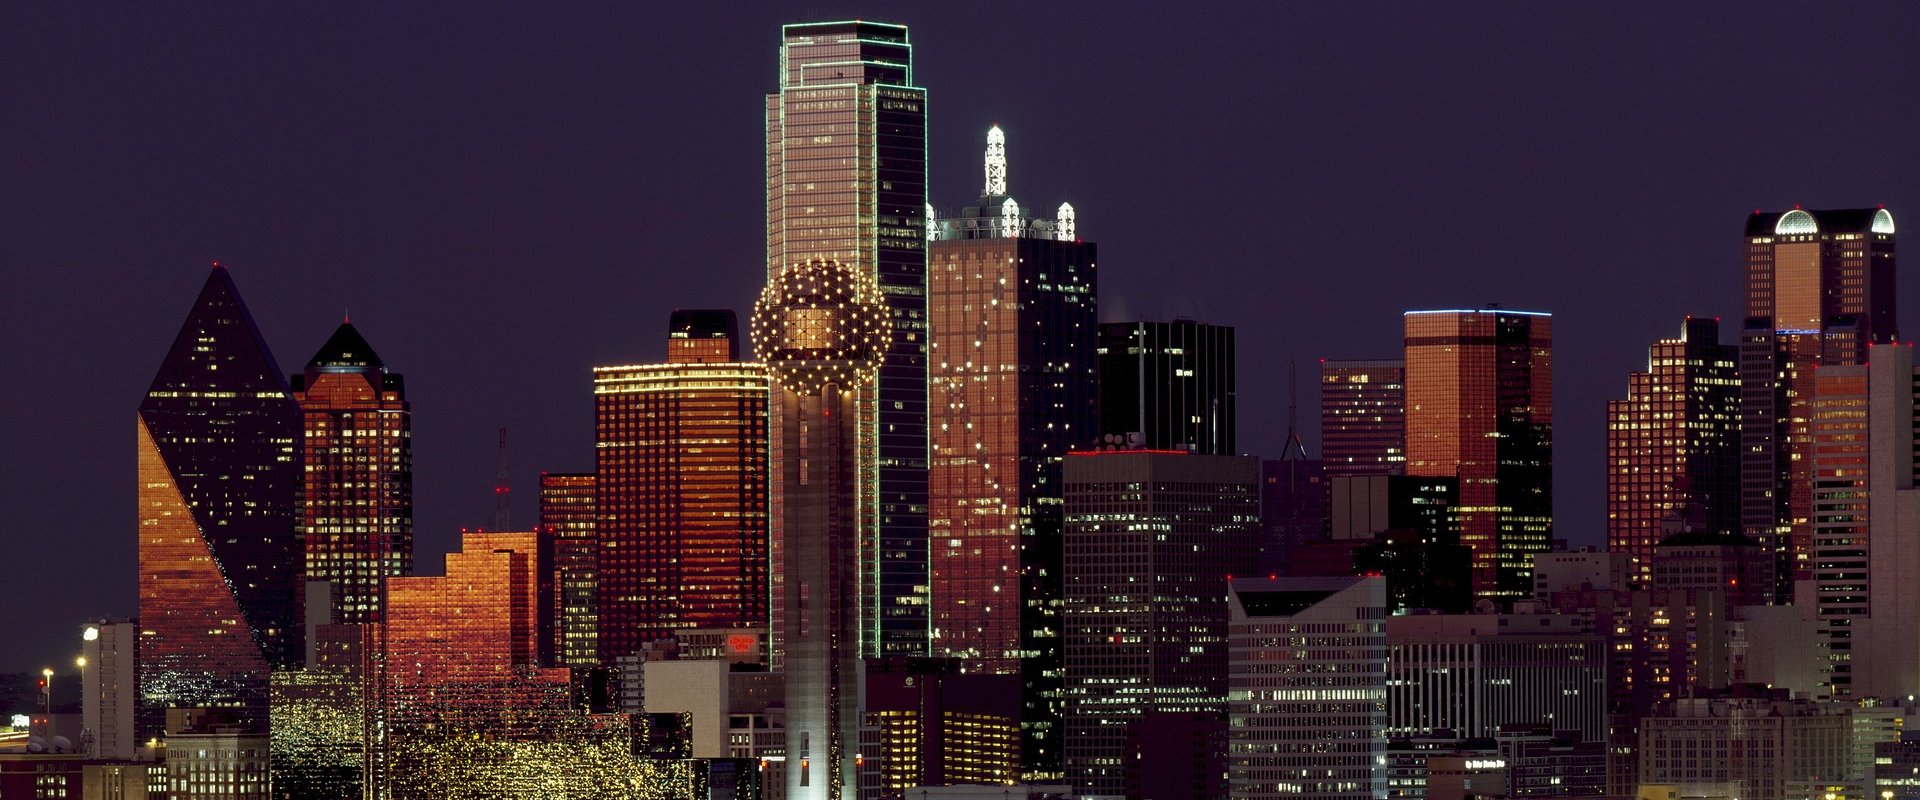 the Dallas city skyline at night